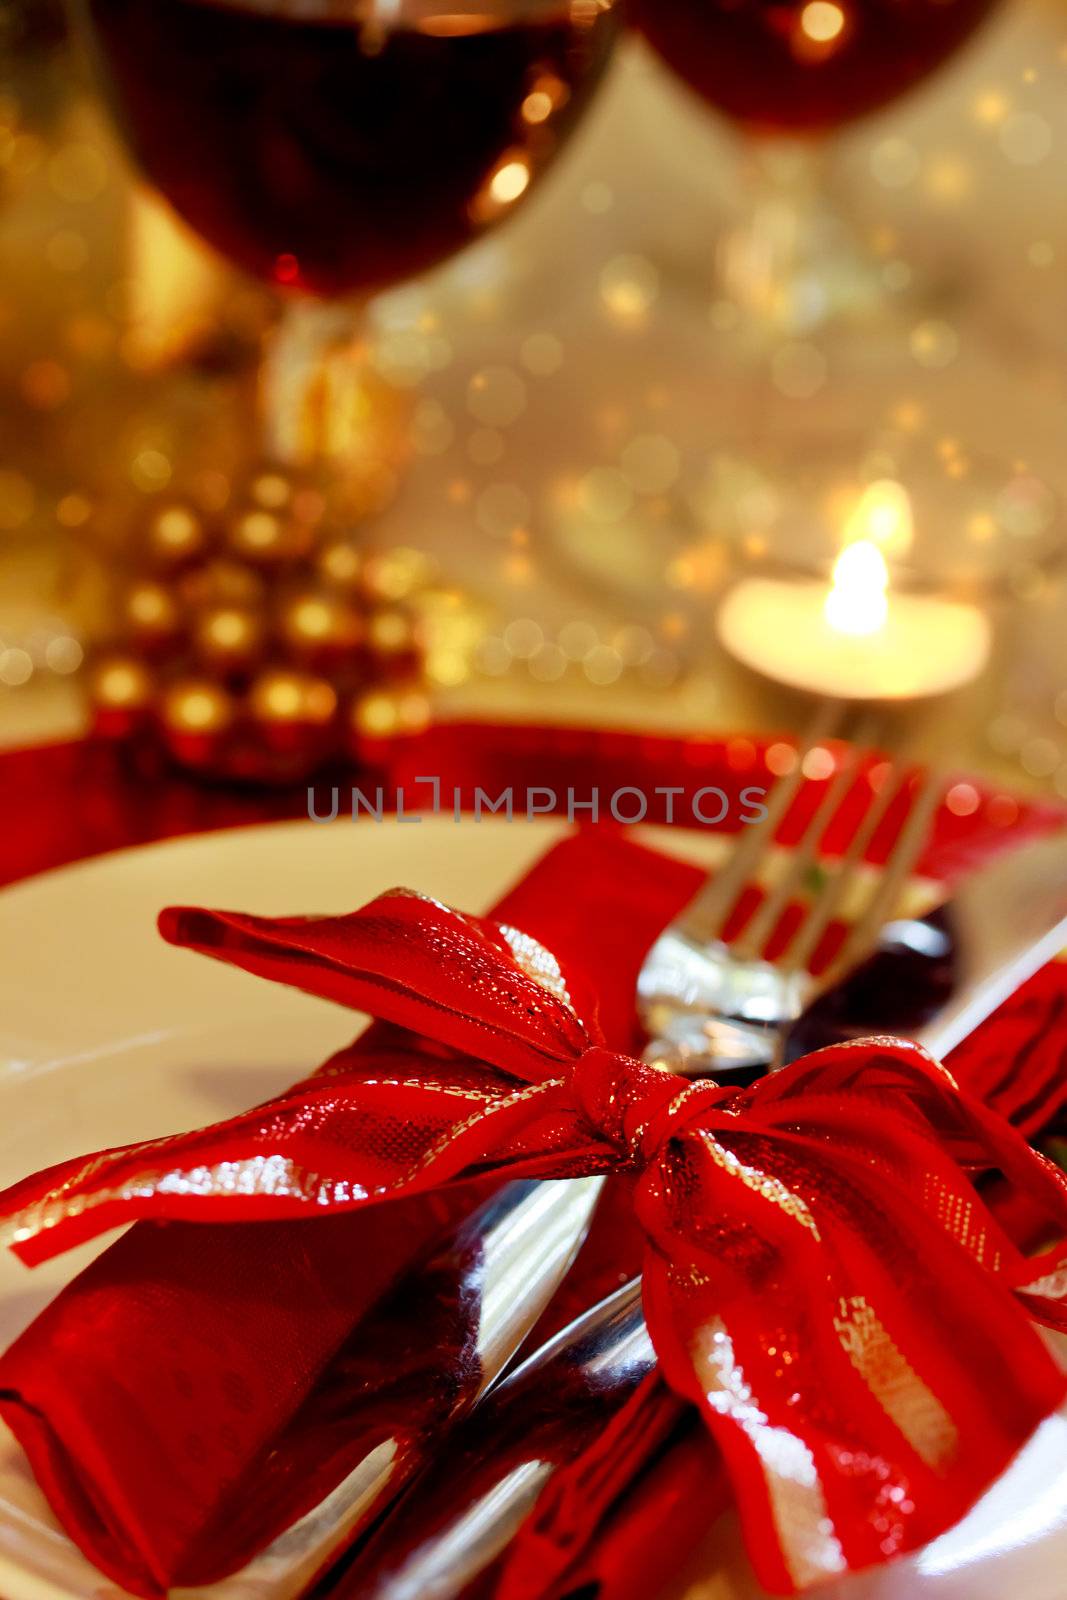 Decorated Christmas Dinner Table by melpomene